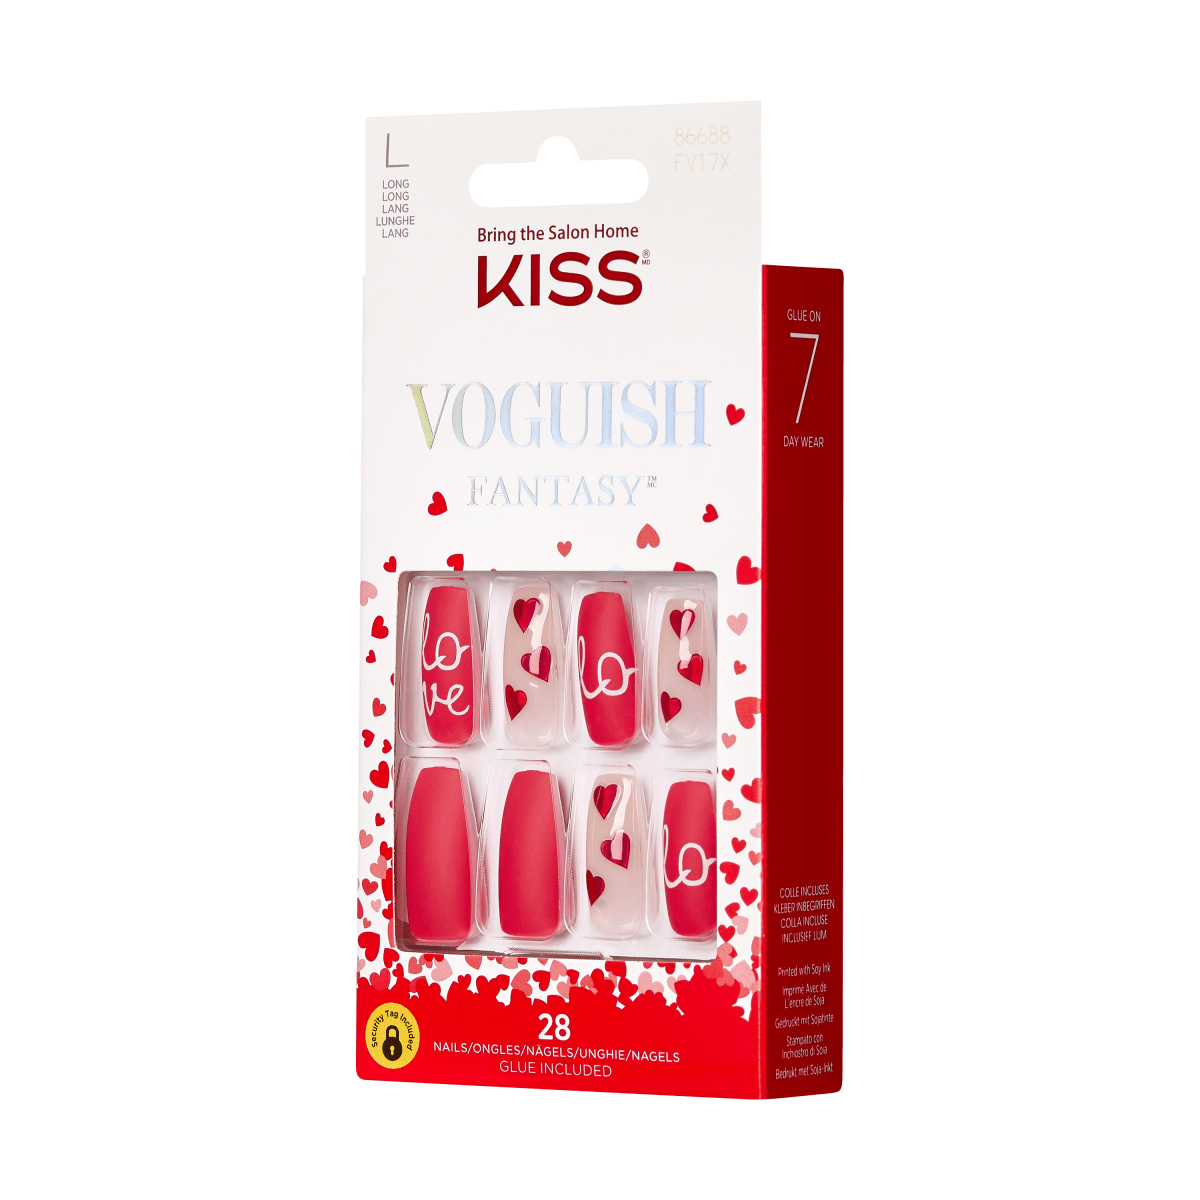 KISS Voguish Fantasy Nails - Let U Love Me